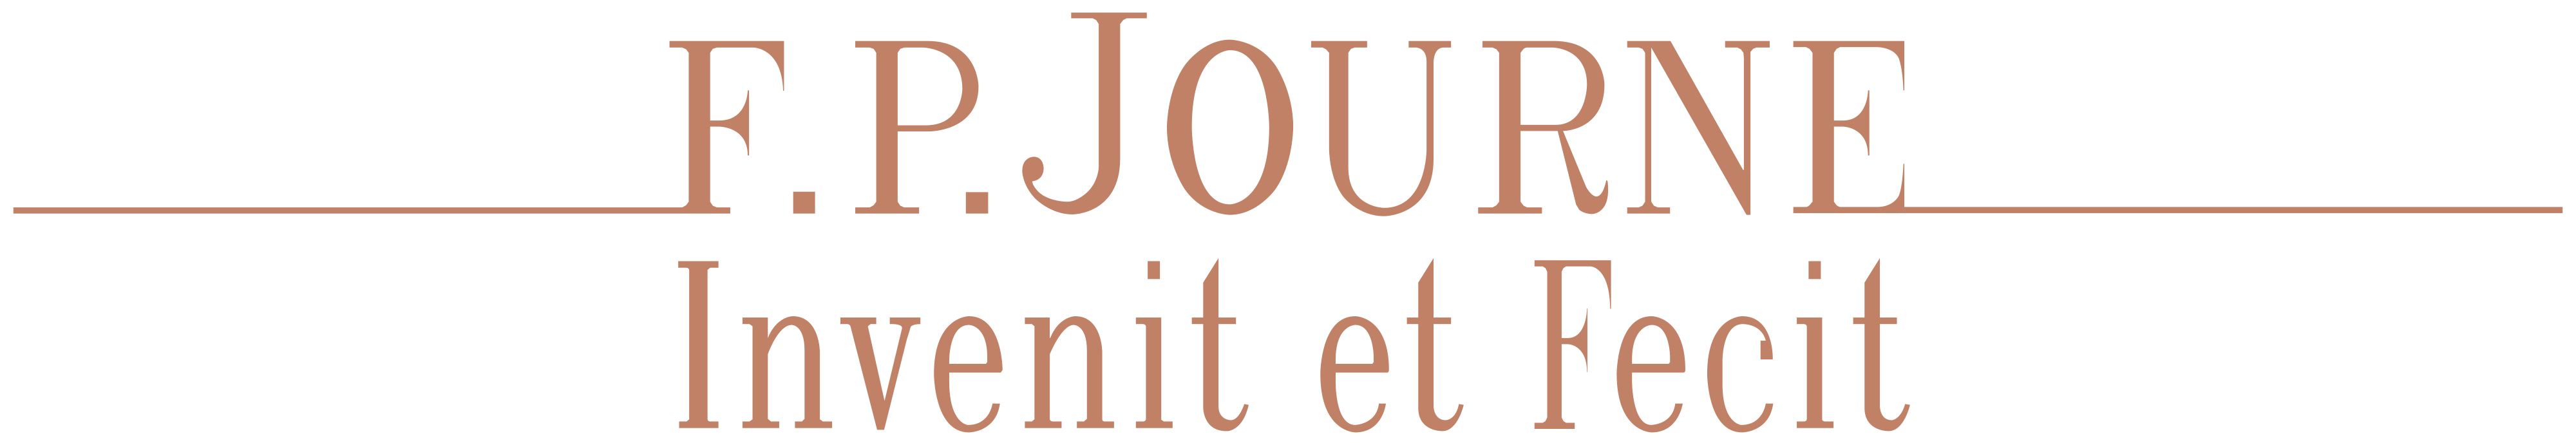 F. P. Journe logo - download.